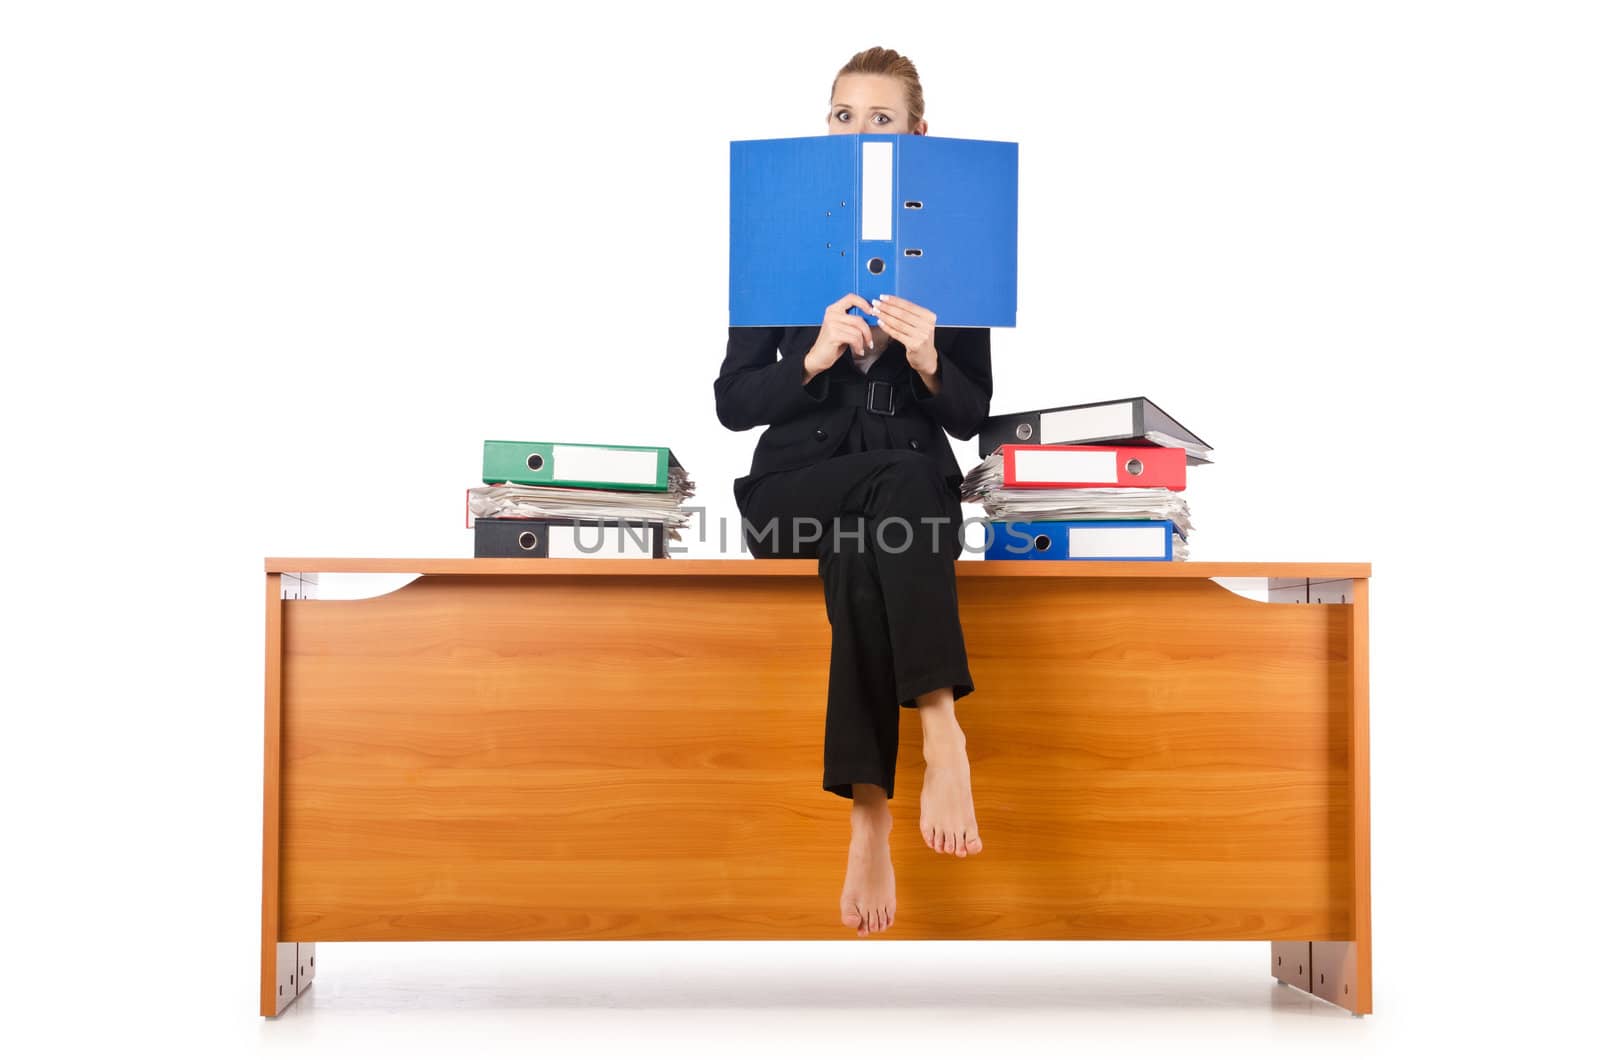 Businesswoman woman on the desk